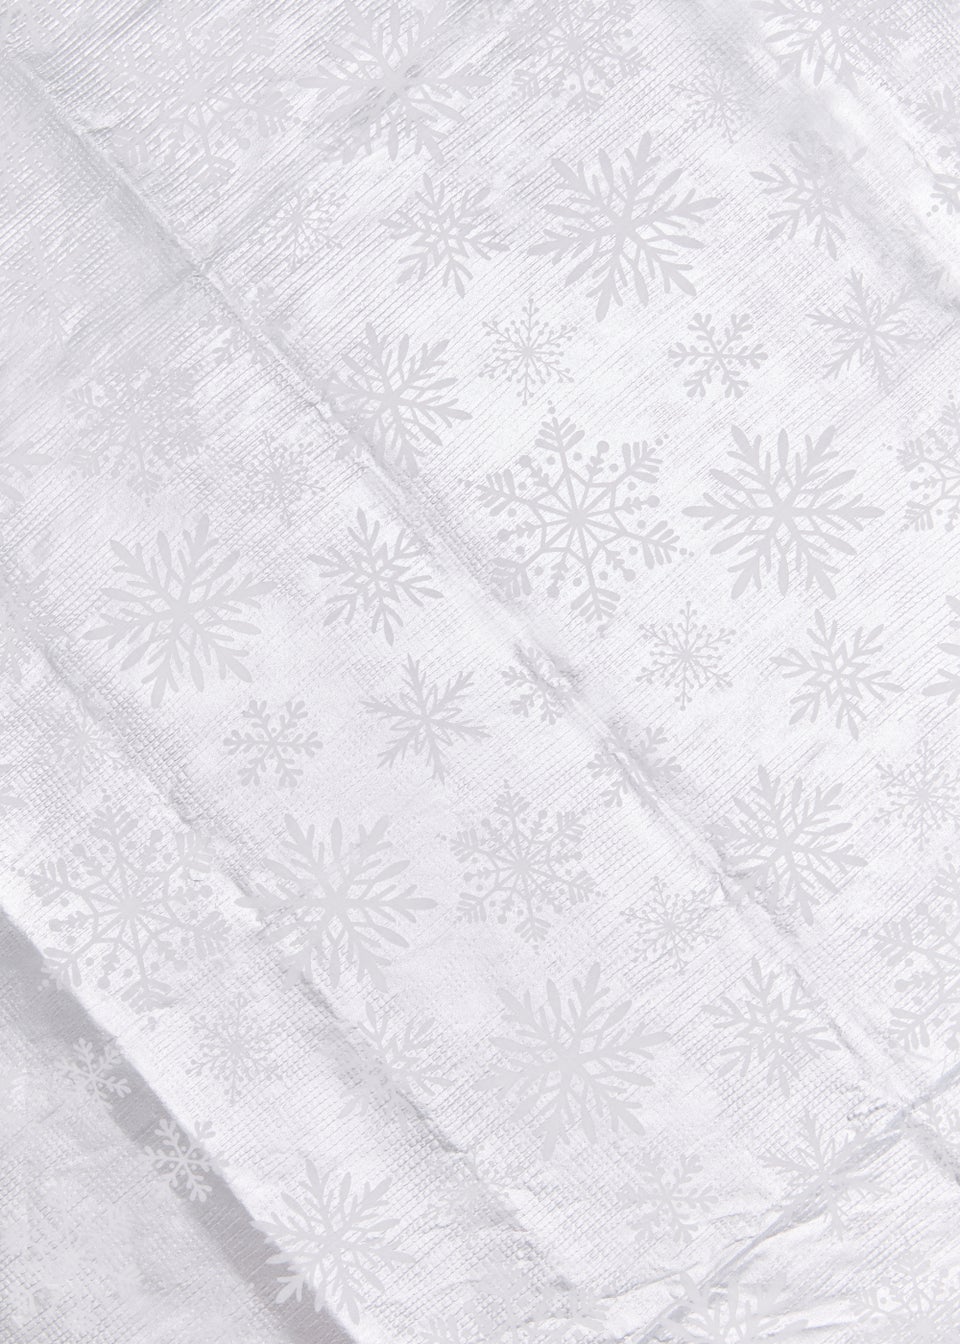 Silver Snowflake Tablecloth (120cm x 180cm)